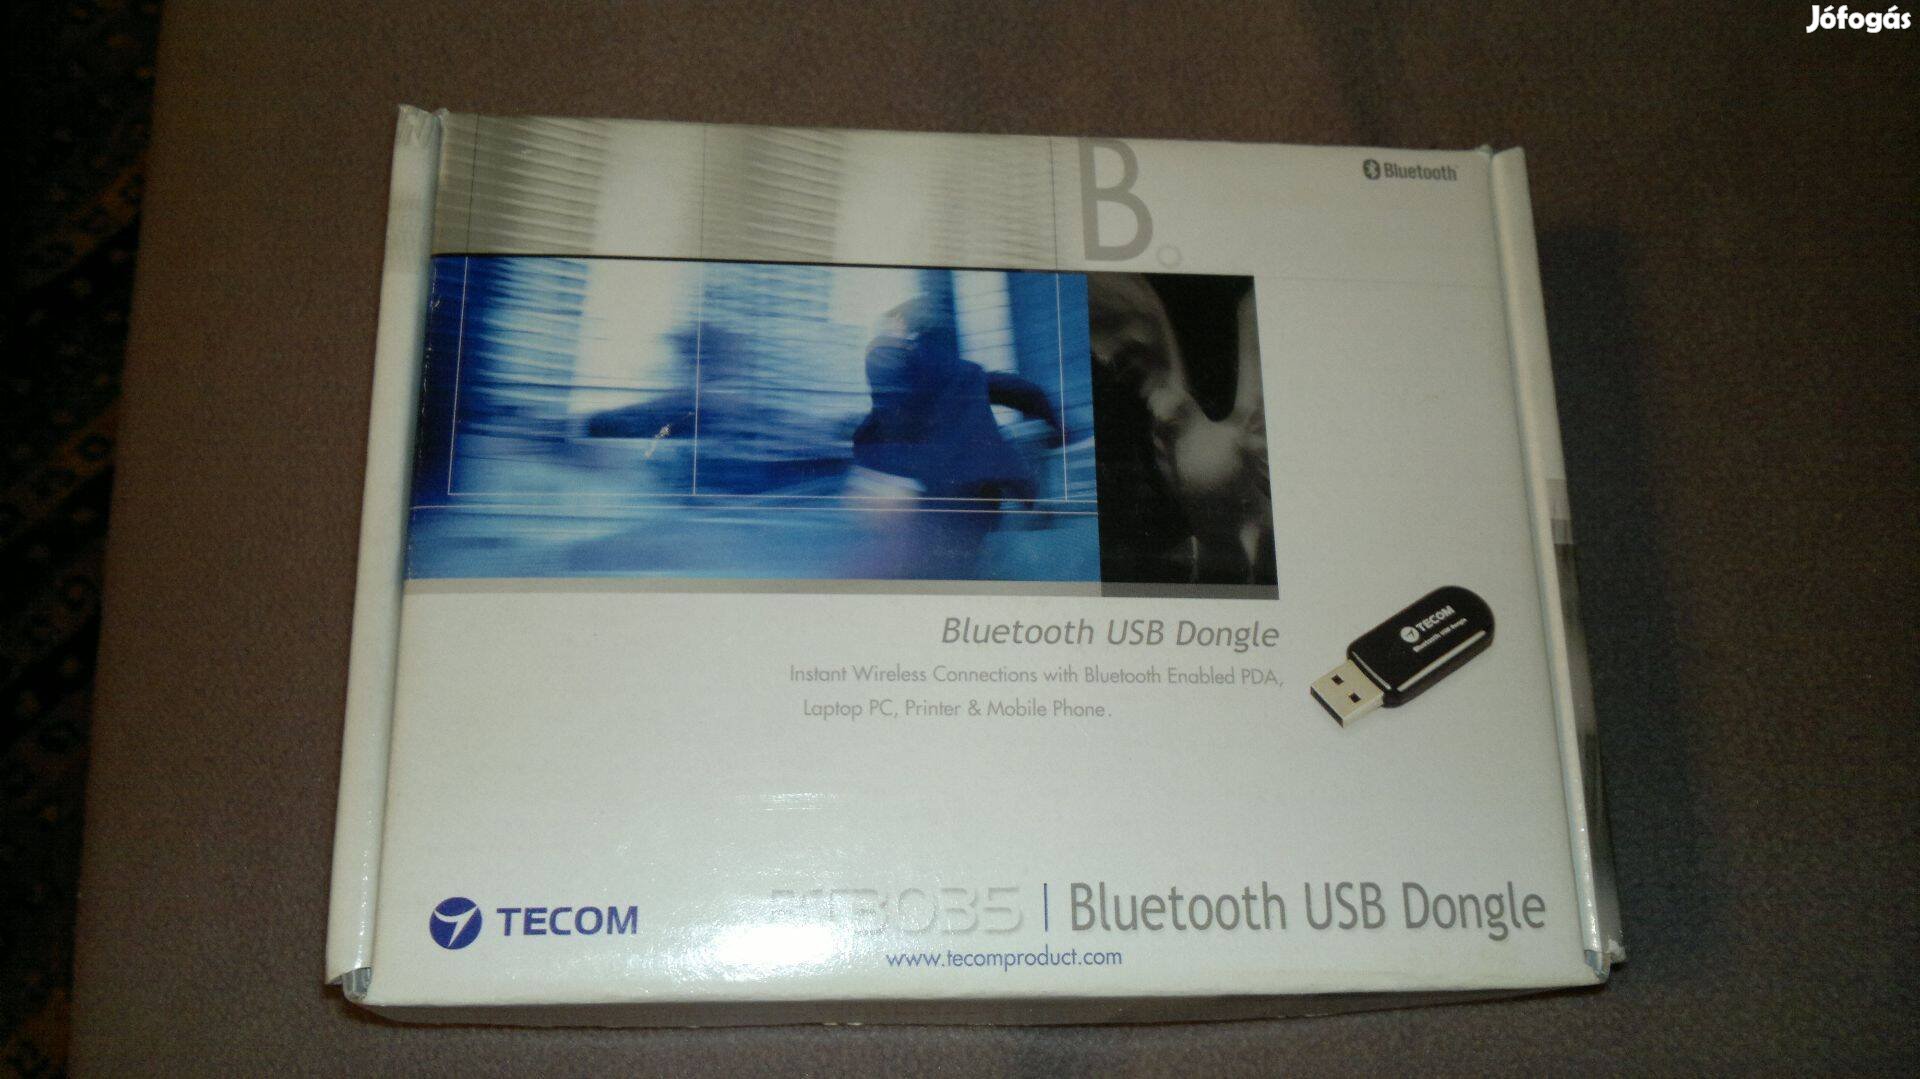 Tecom BT3035 Bluetooth USB Dongle